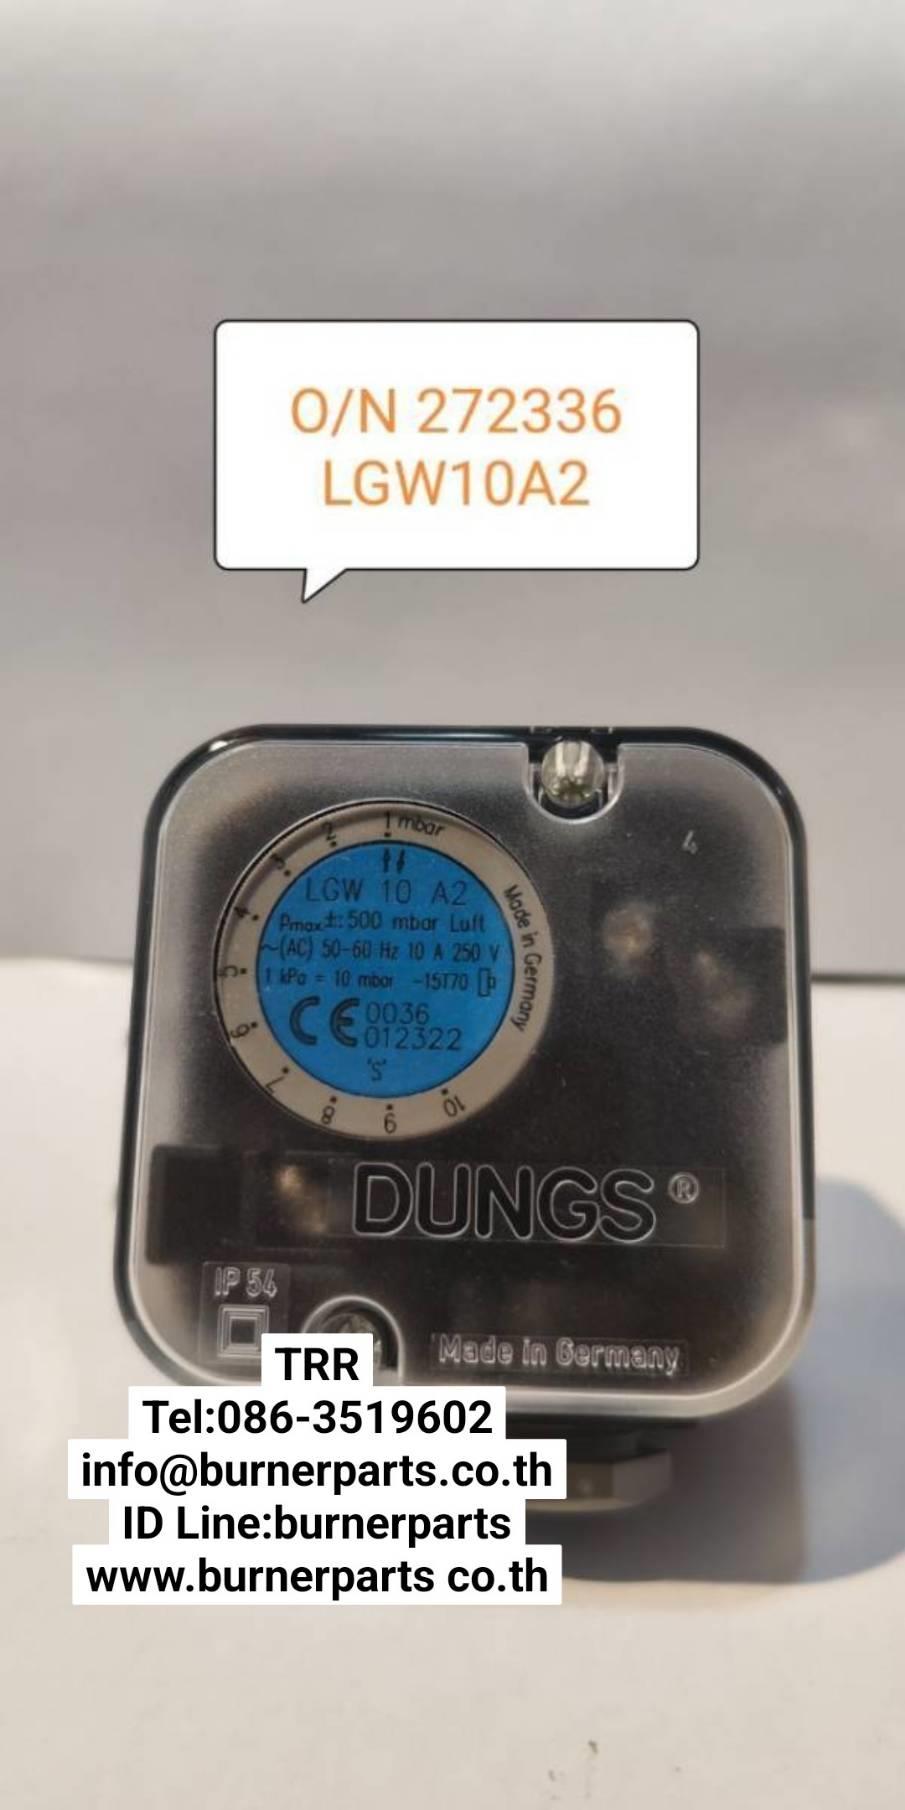 DUNGS LGW10A2,DUNGS LGW10A2,DUNGS LGW10A2,Instruments and Controls/Sensors